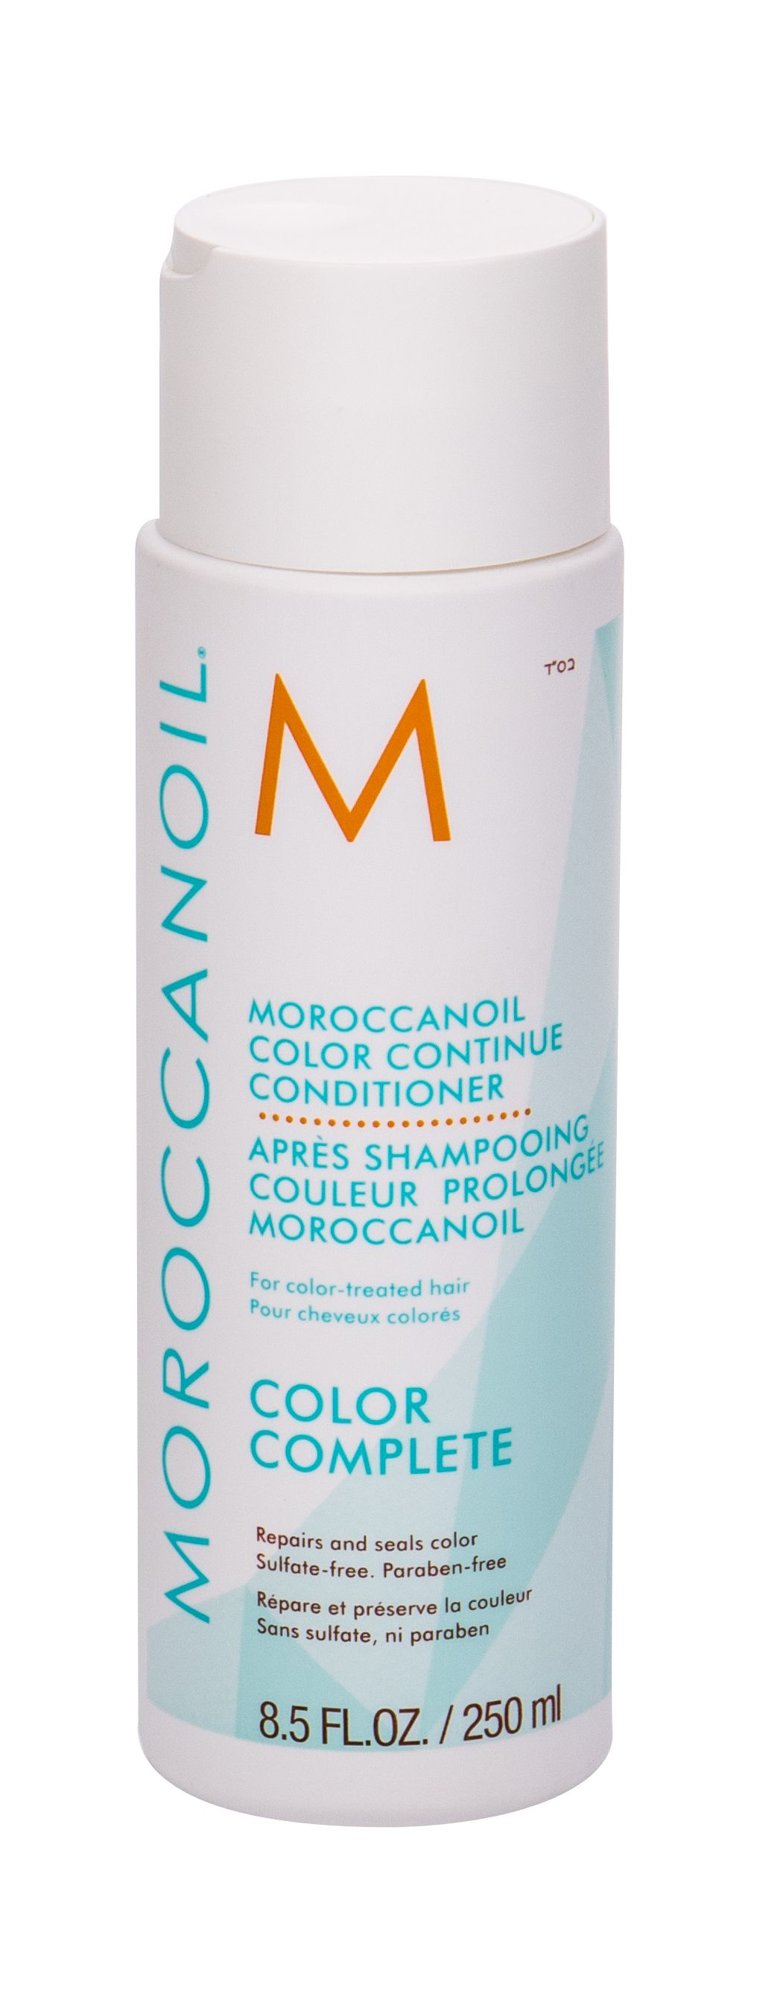 Moroccanoil Color Complete 250ml kondicionierius